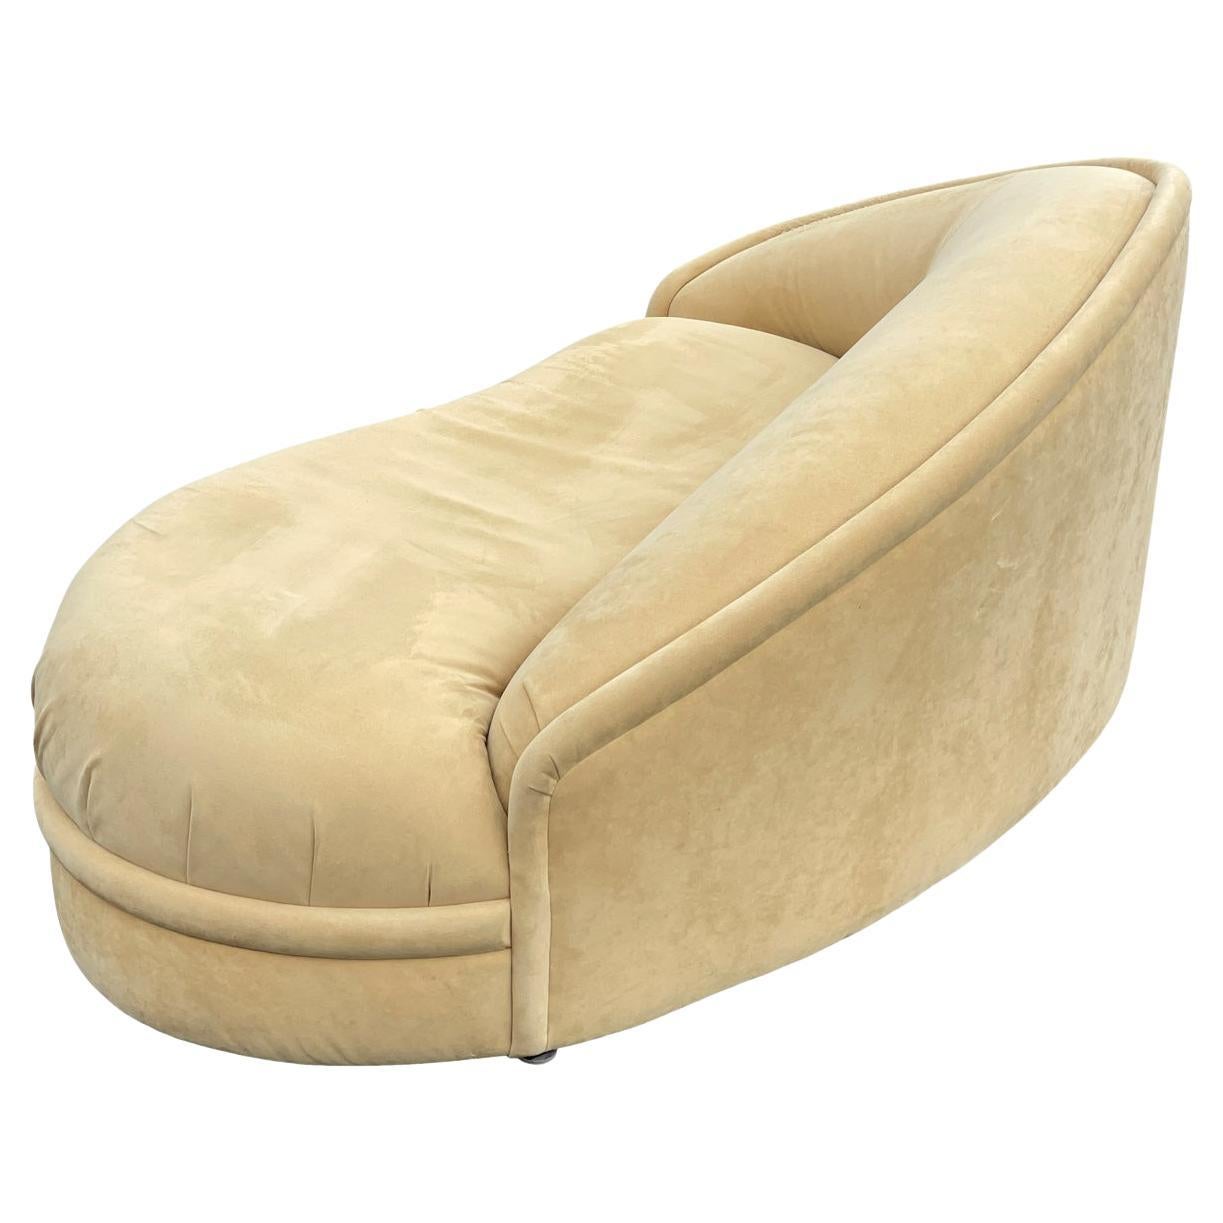 Biomorphes knöchelförmiges Mid-Century Modern Chaise Lounge Sofa